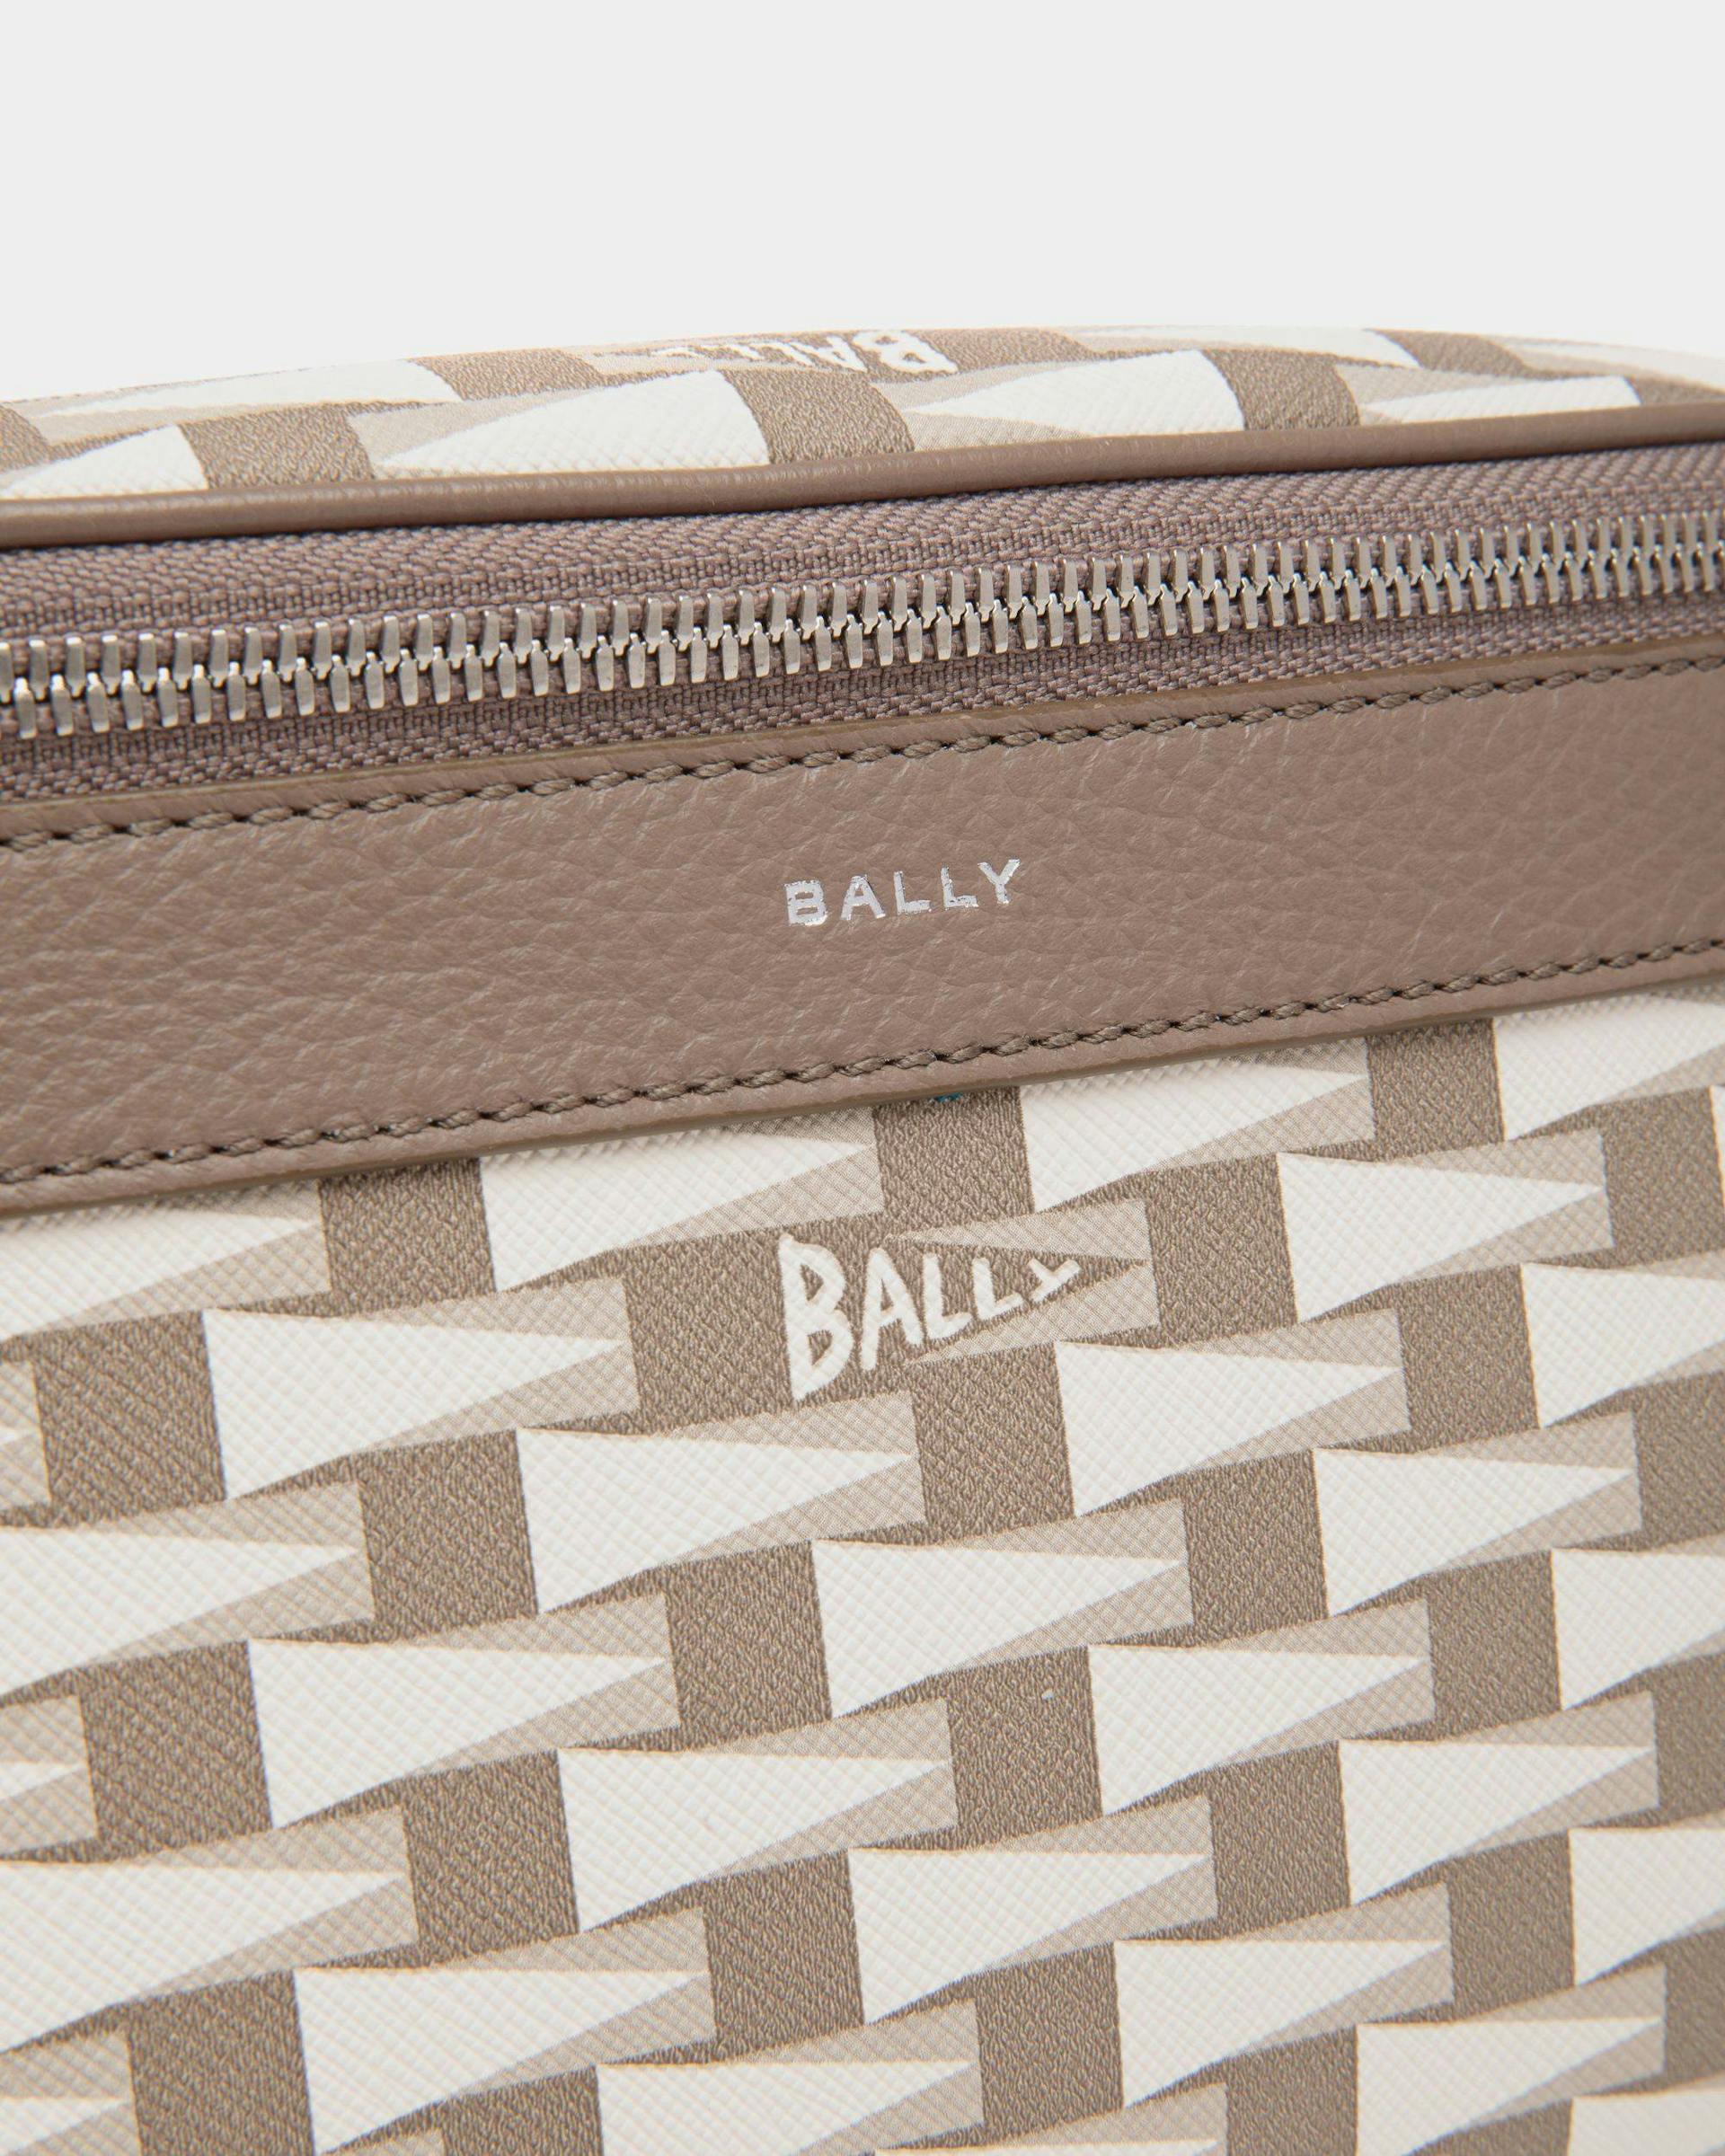 Men's Pennant Belt Bag in Beige Pennant Motif TPU | Bally | Still Life Detail